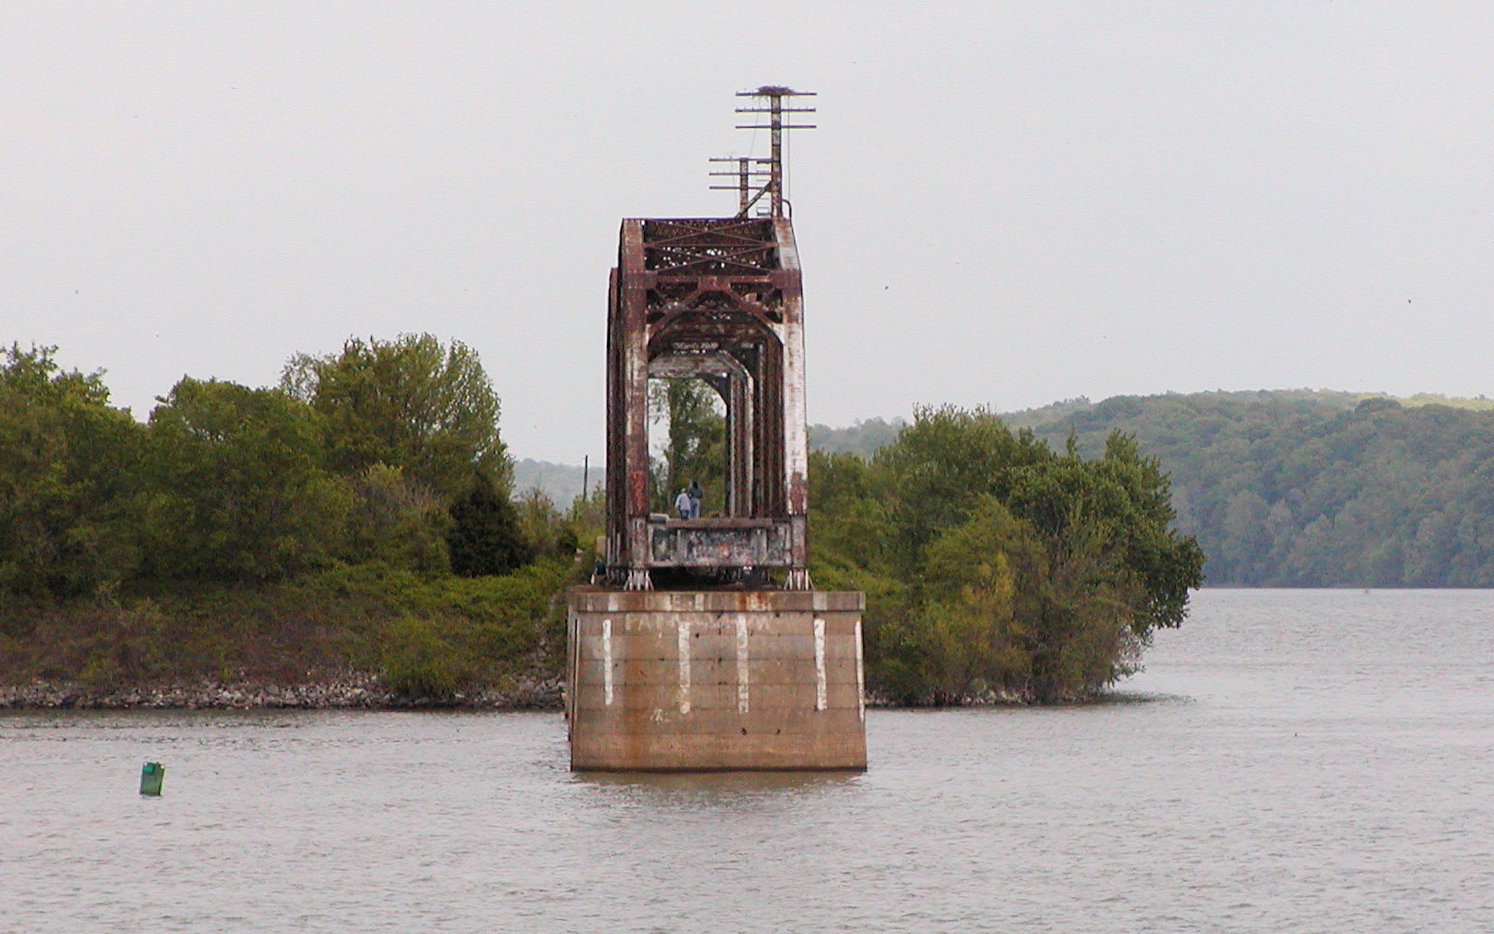 Danville L&N Railroad Bridge